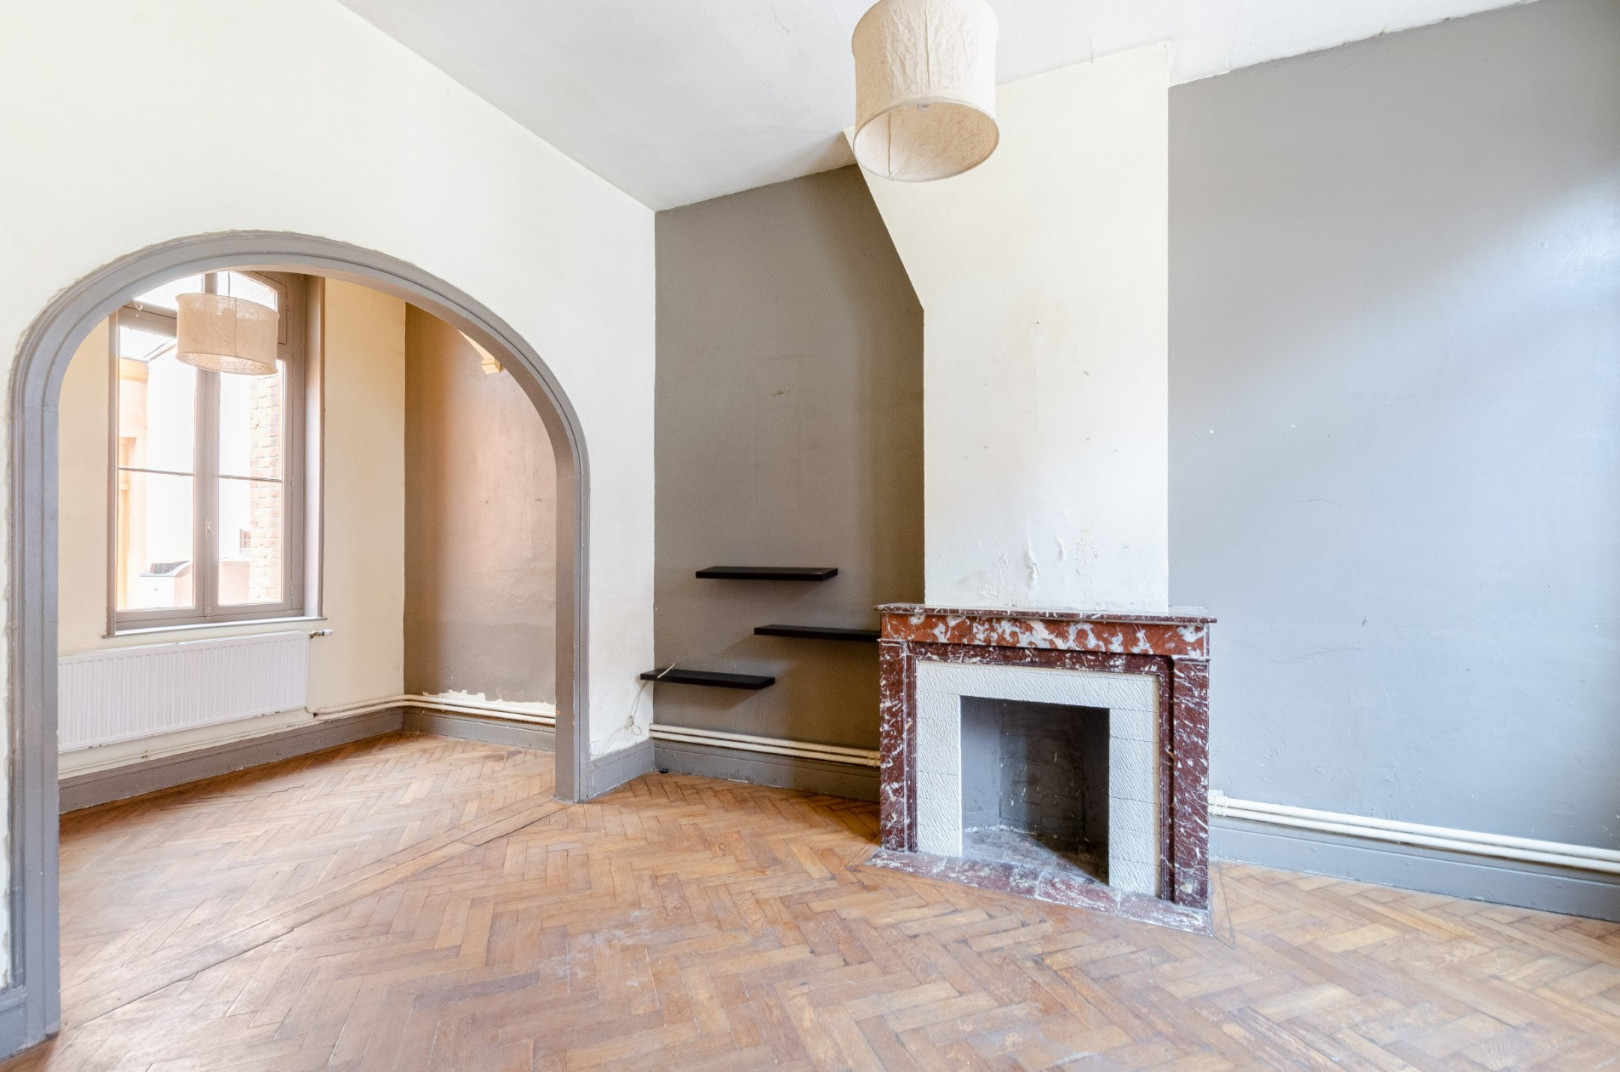 
                                                Vente
                                                 Maison - 168 m² - Tourcoing (59)